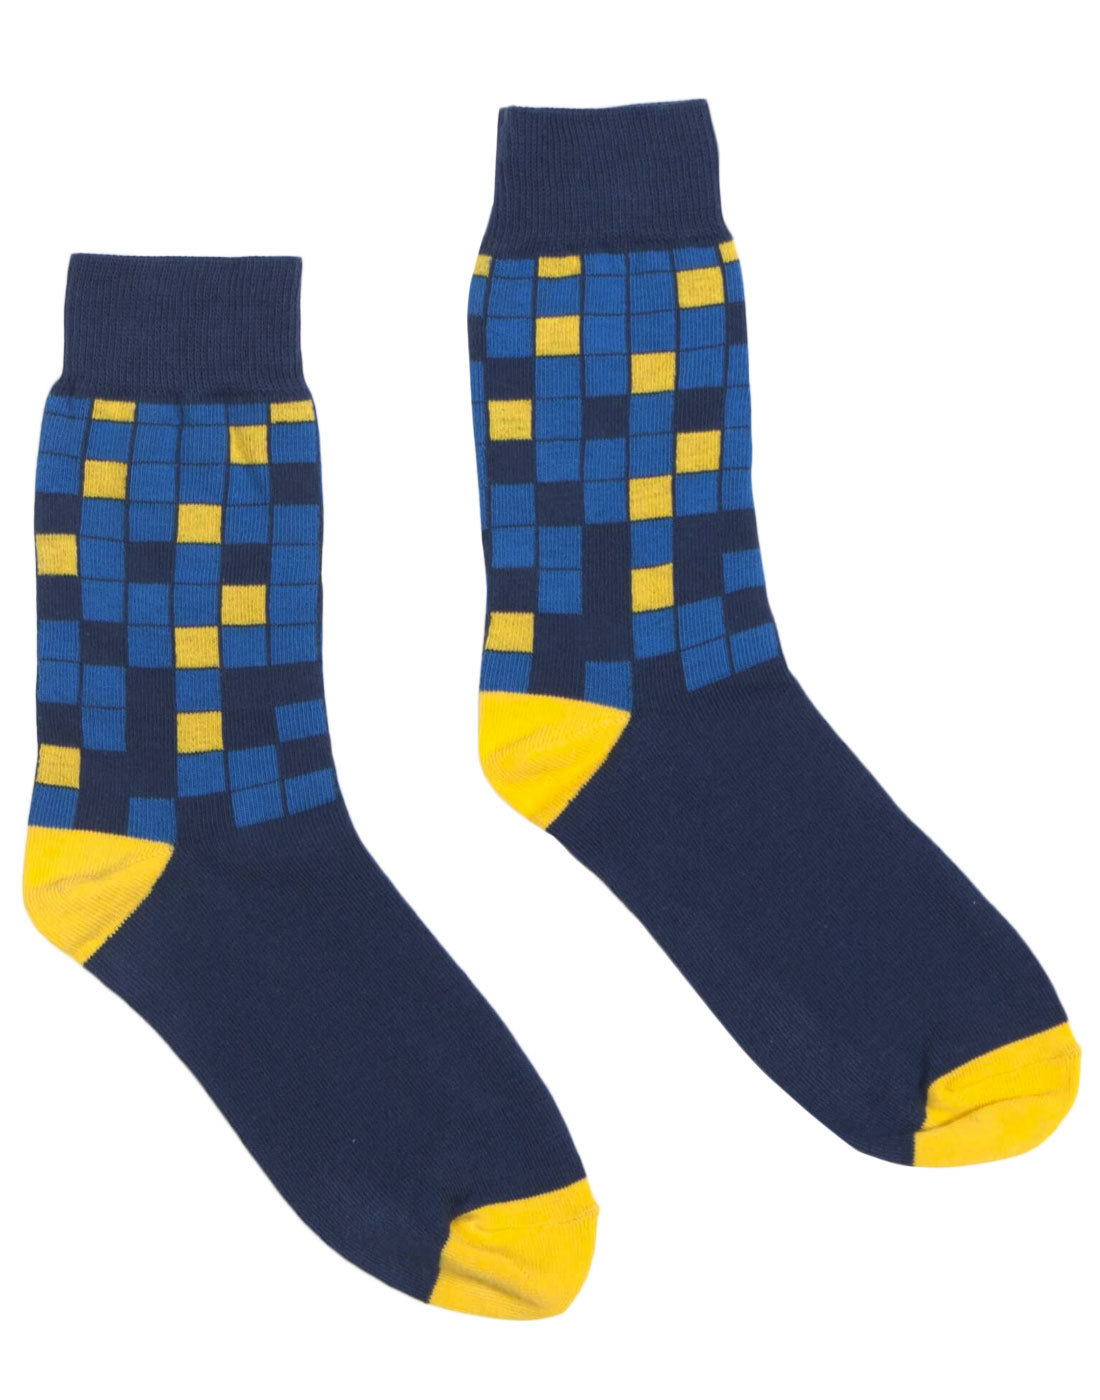 AFIELD Men's Retro Mod Abstract Square Pool Tile Socks in Blue